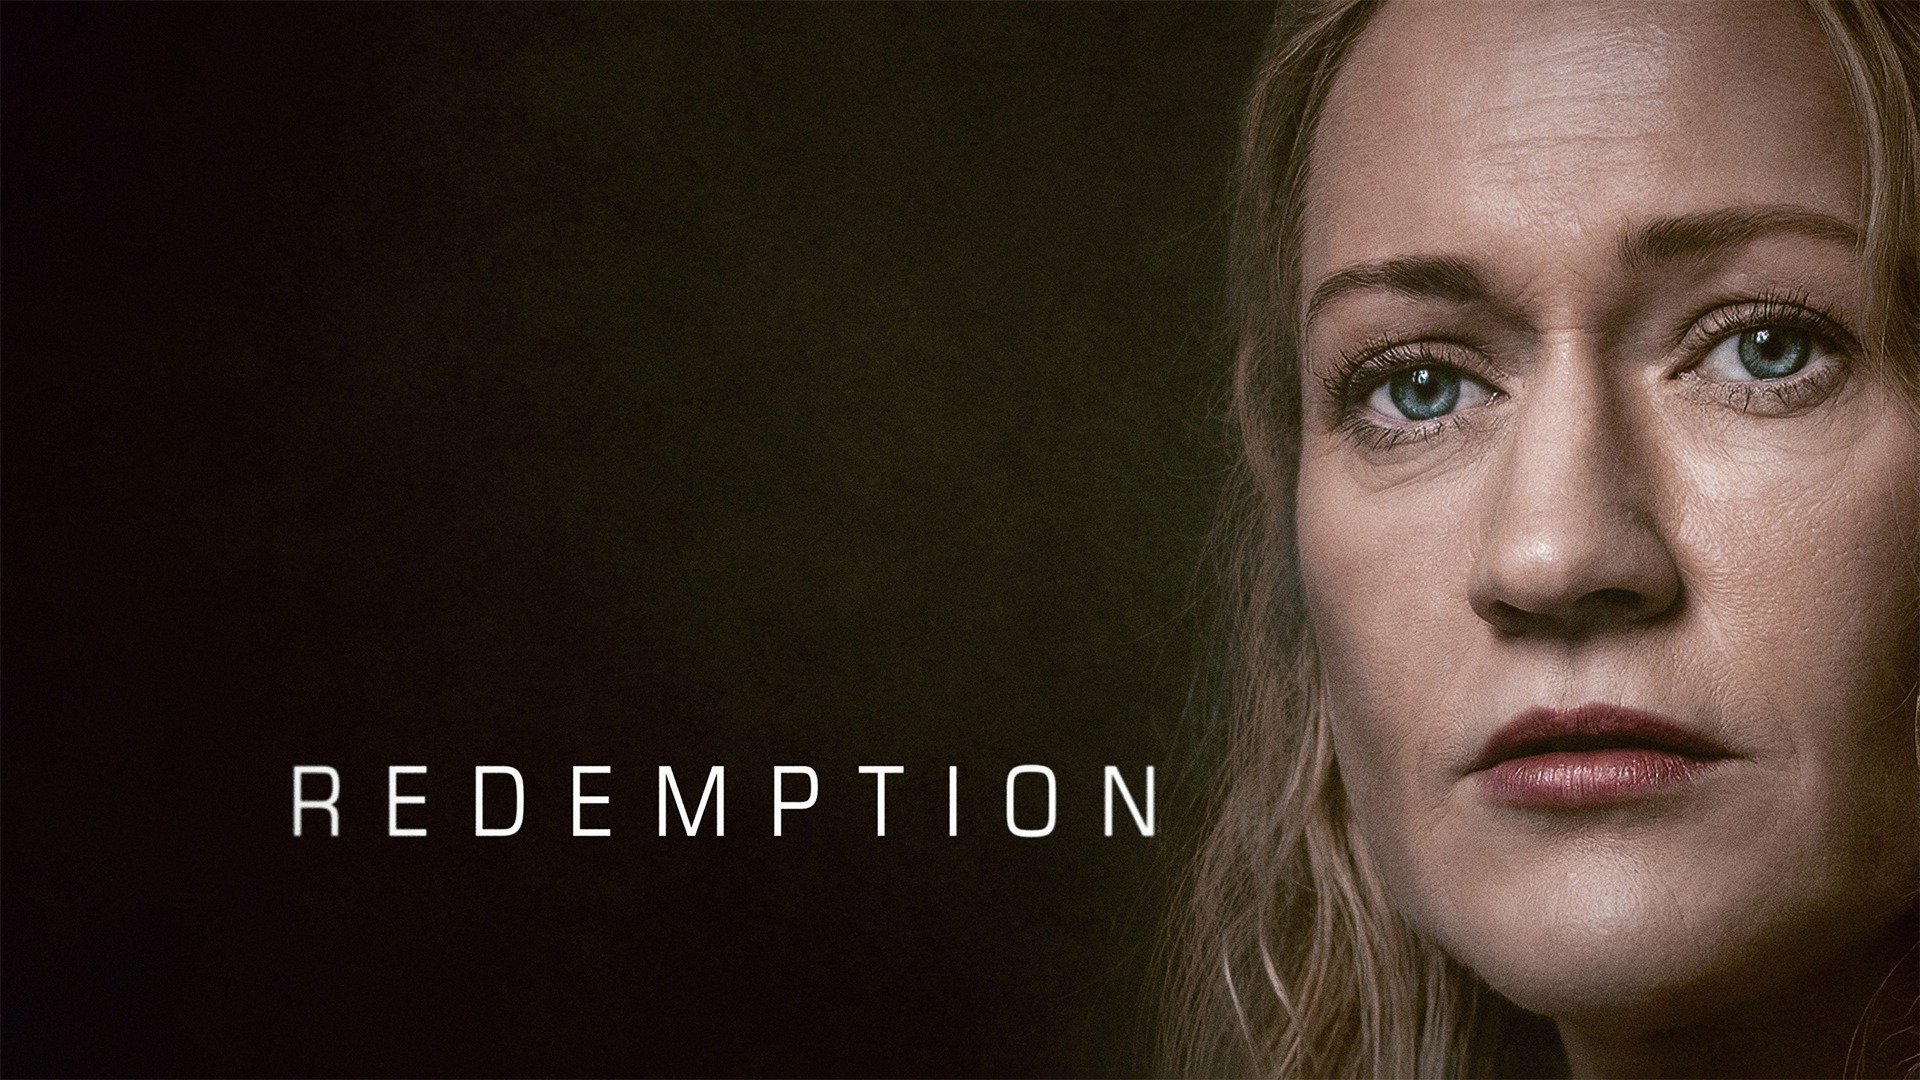 Redemption 2013 Full Movie Online - Watch HD Movies on Airtel Xstream Play